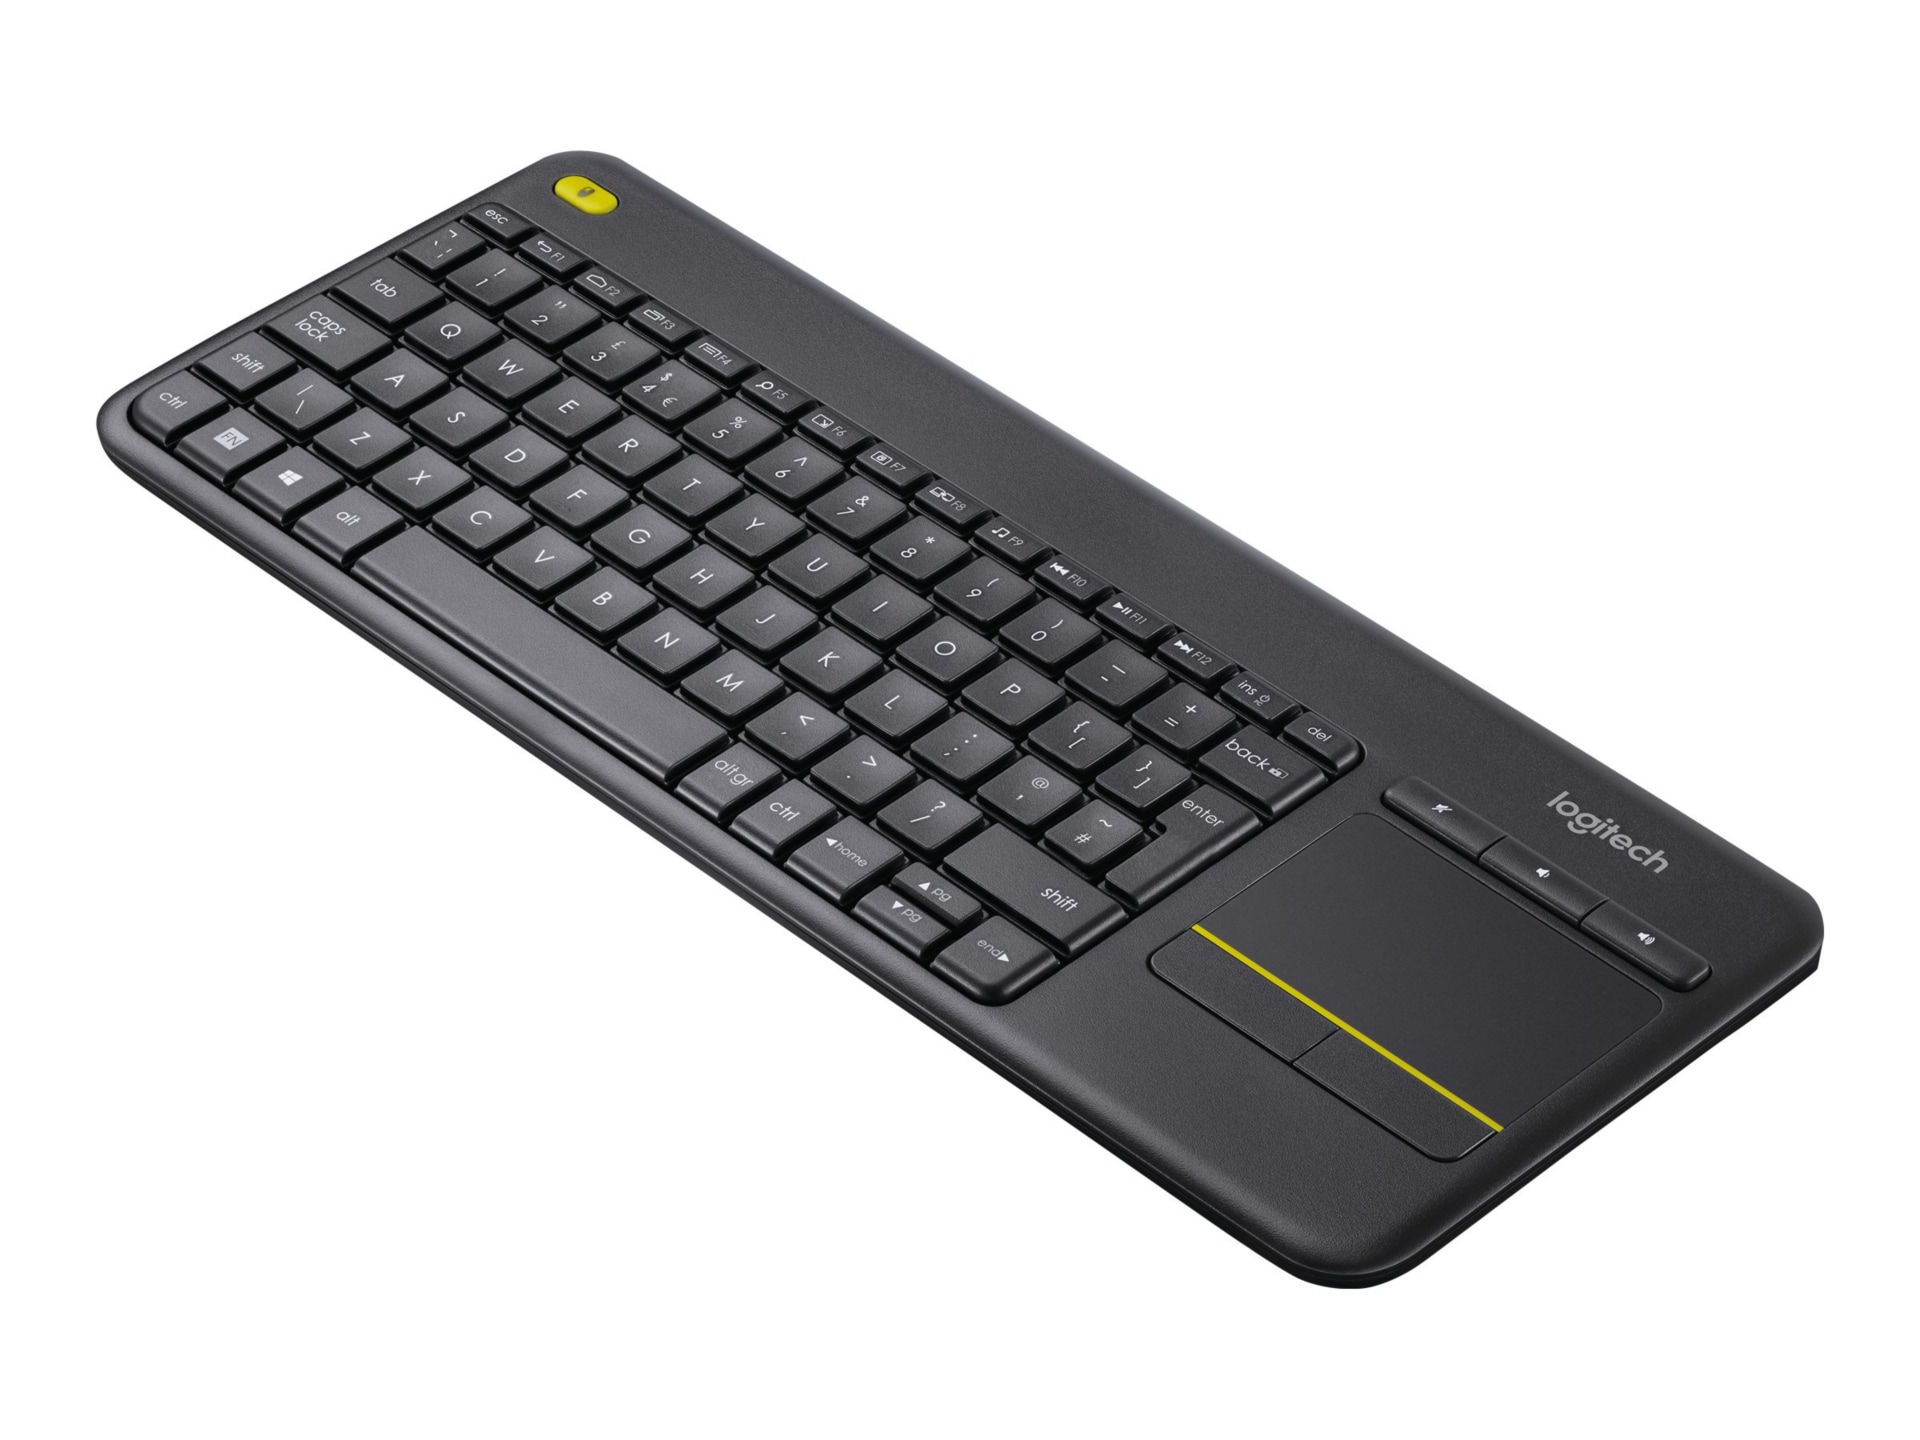 Logitech Wireless Touch K400 Plus - keyboard - with touchpad - QWERTY - International - black - 920-007119 - Keyboards - CDW.com